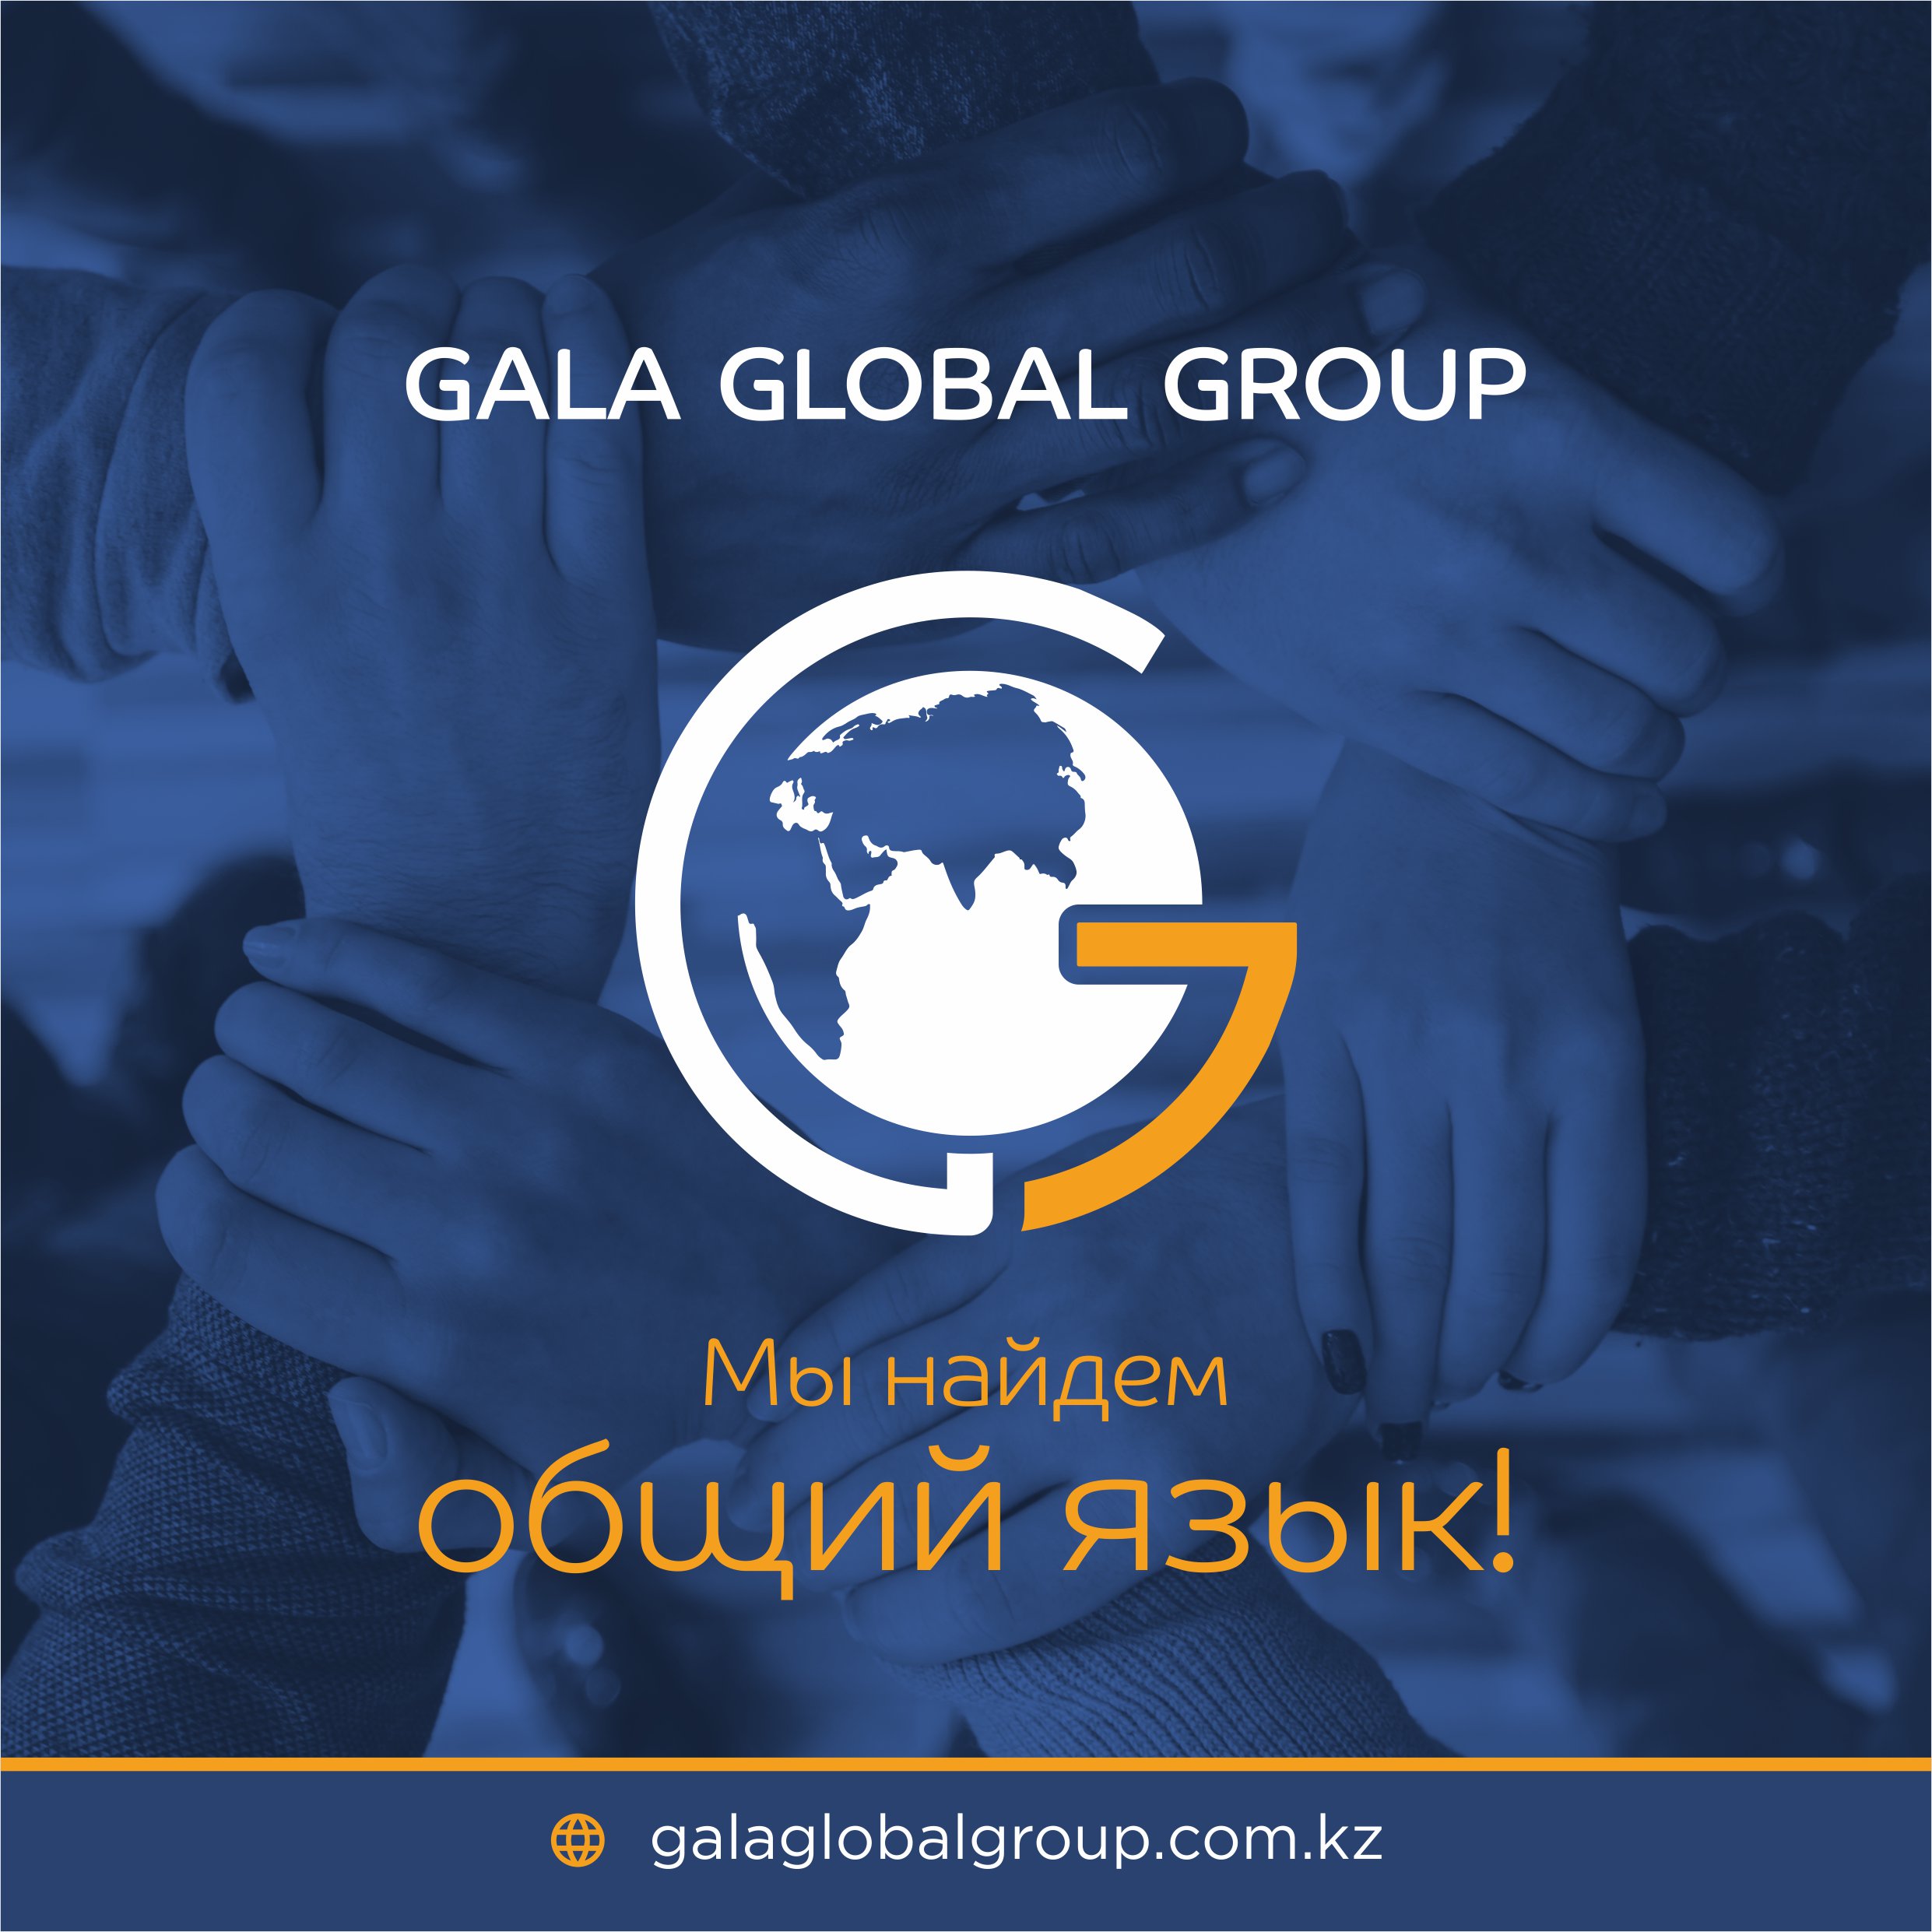 Gala Global Group